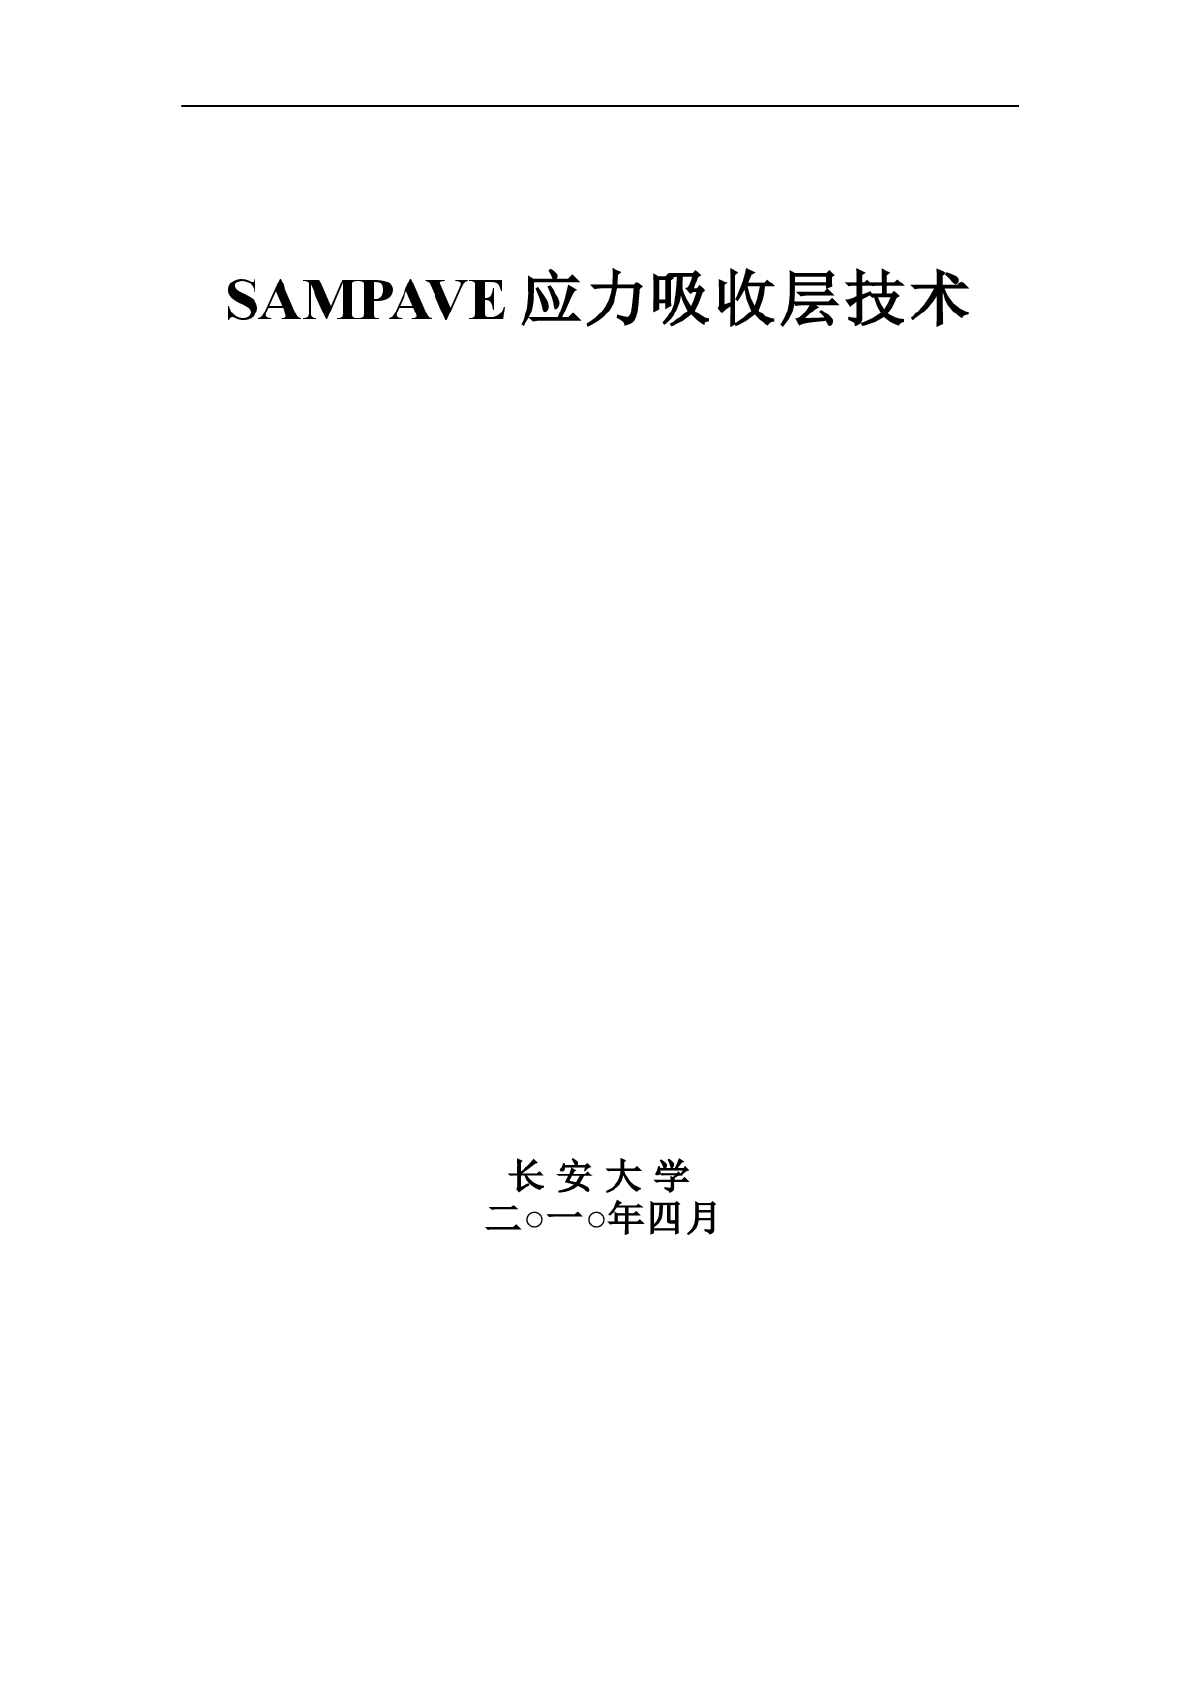 SAMPAVE应力吸收层技术